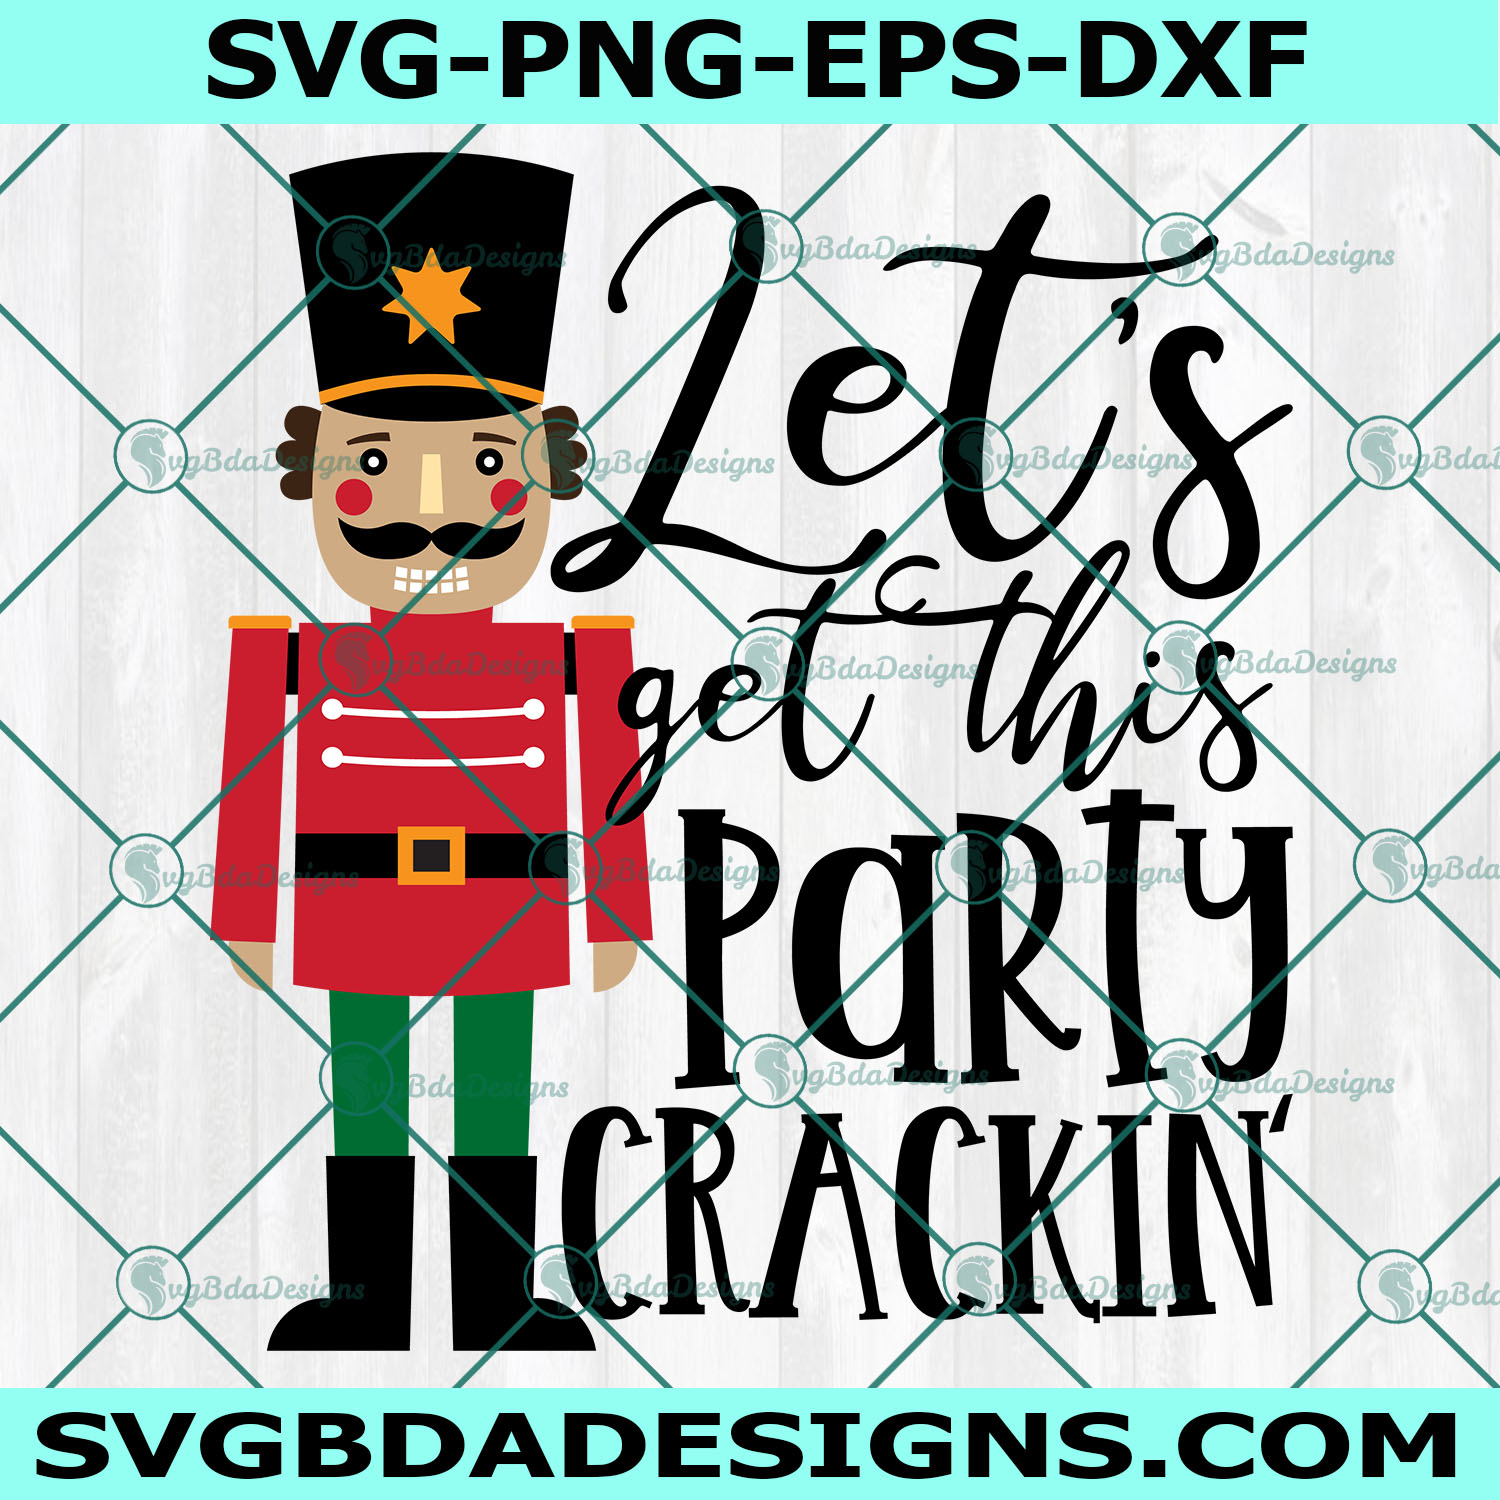 Let's get this party crackin' SVG ,Christmas SVG, Digital Download